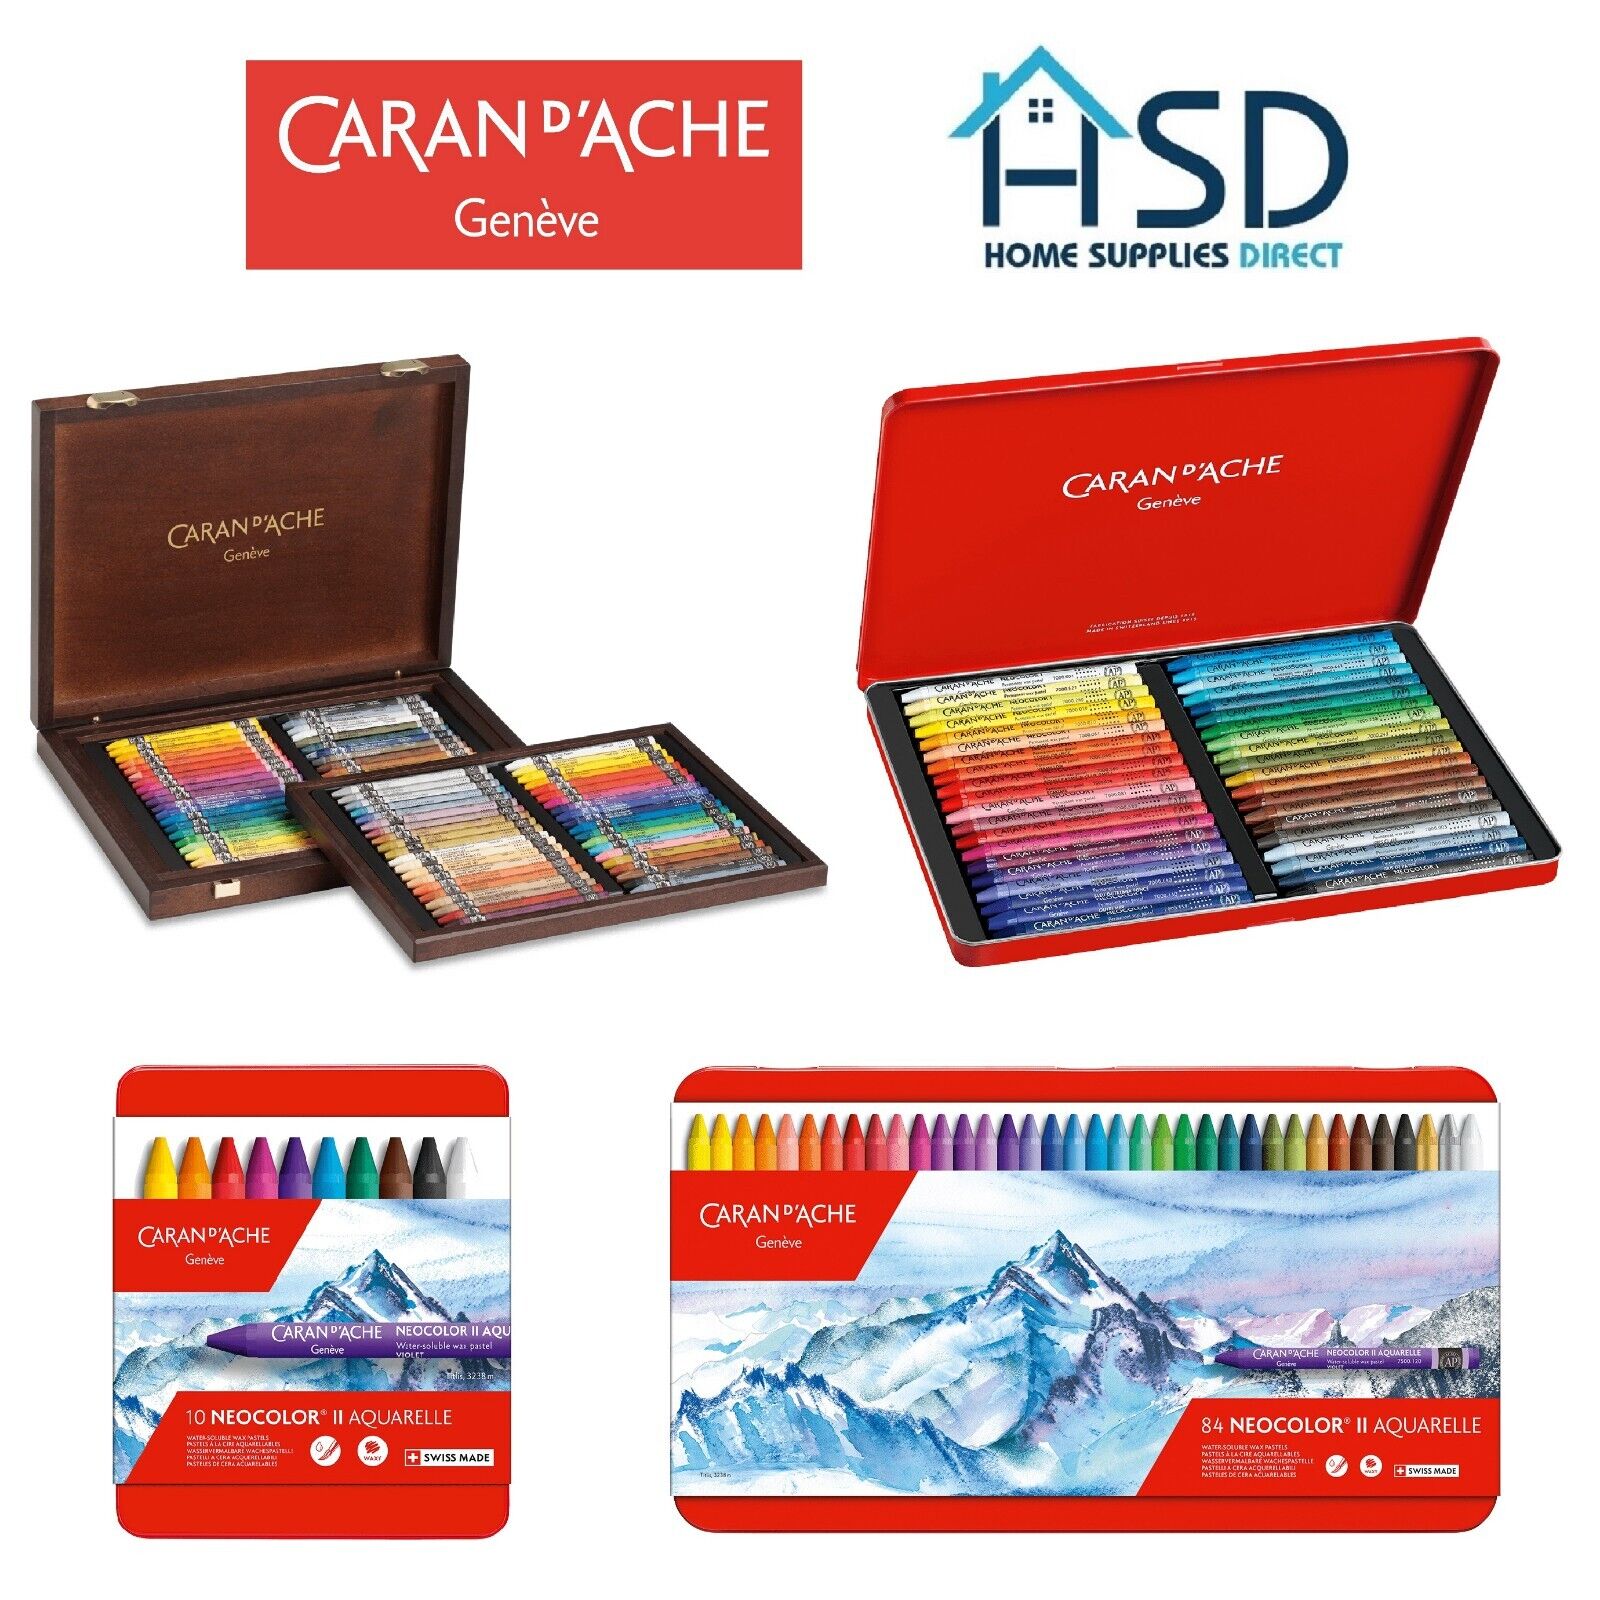 Caran d'Ache Neocolor II Aquarelle Water-Soluble Wax Pastel Sets